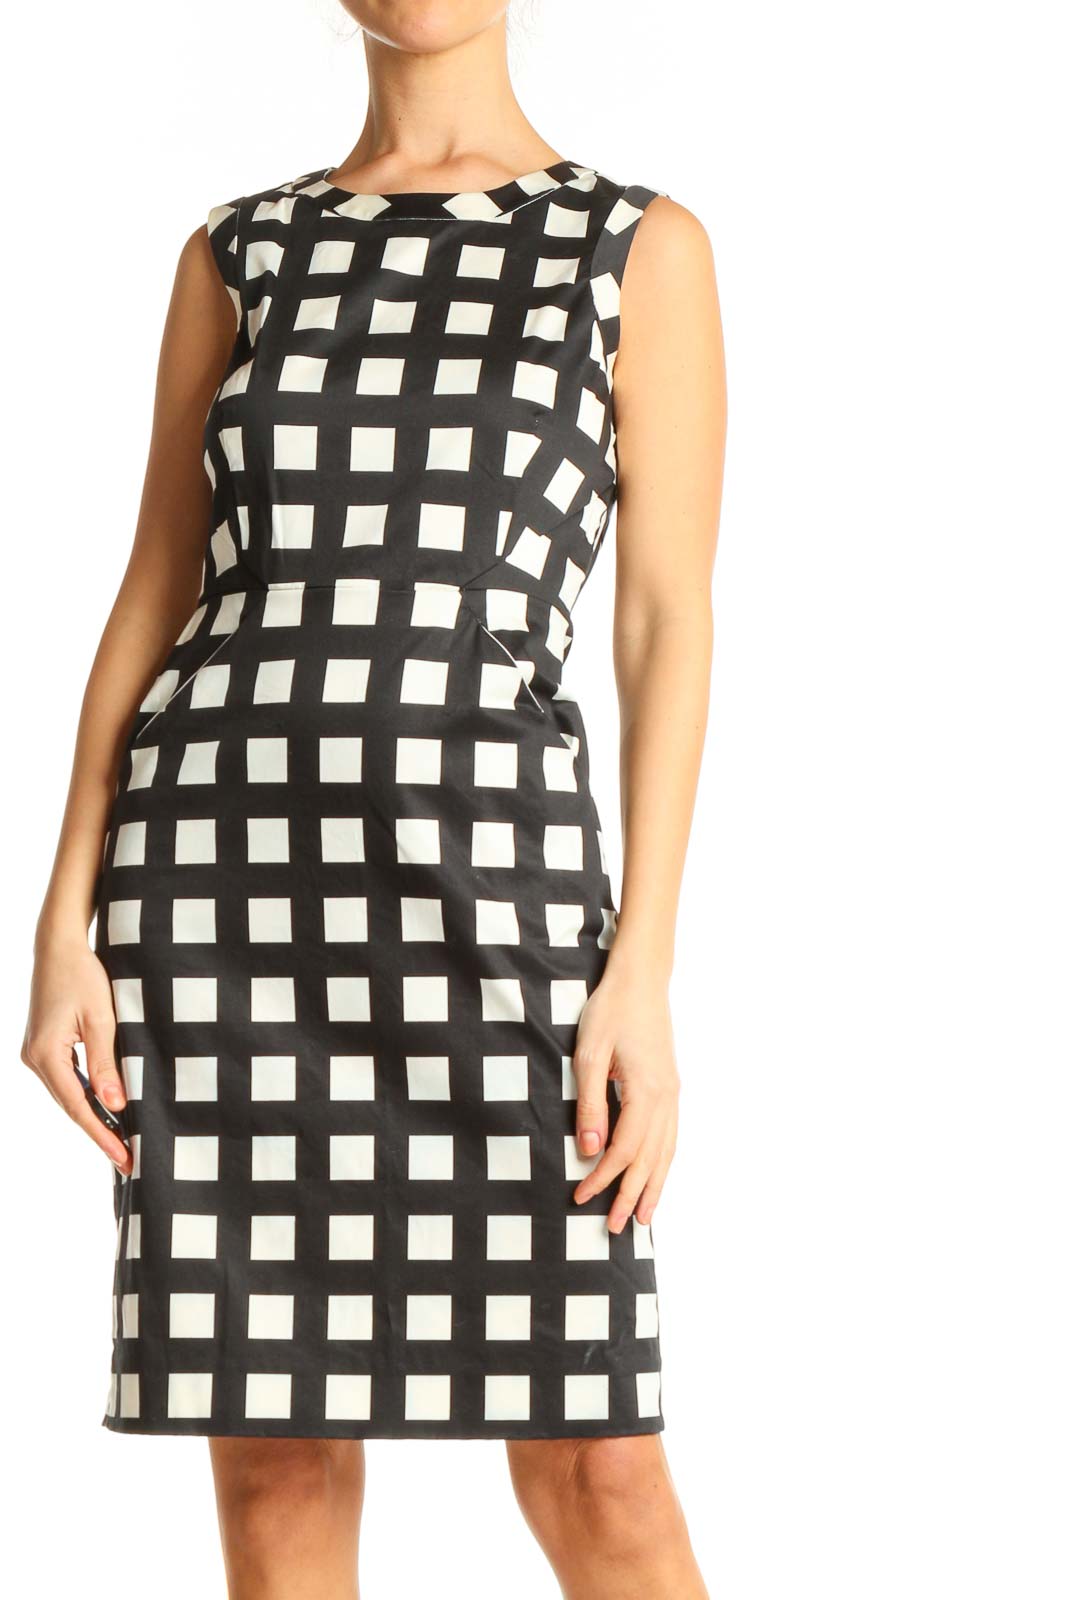 Black Checkered Work Sheath Dress Front